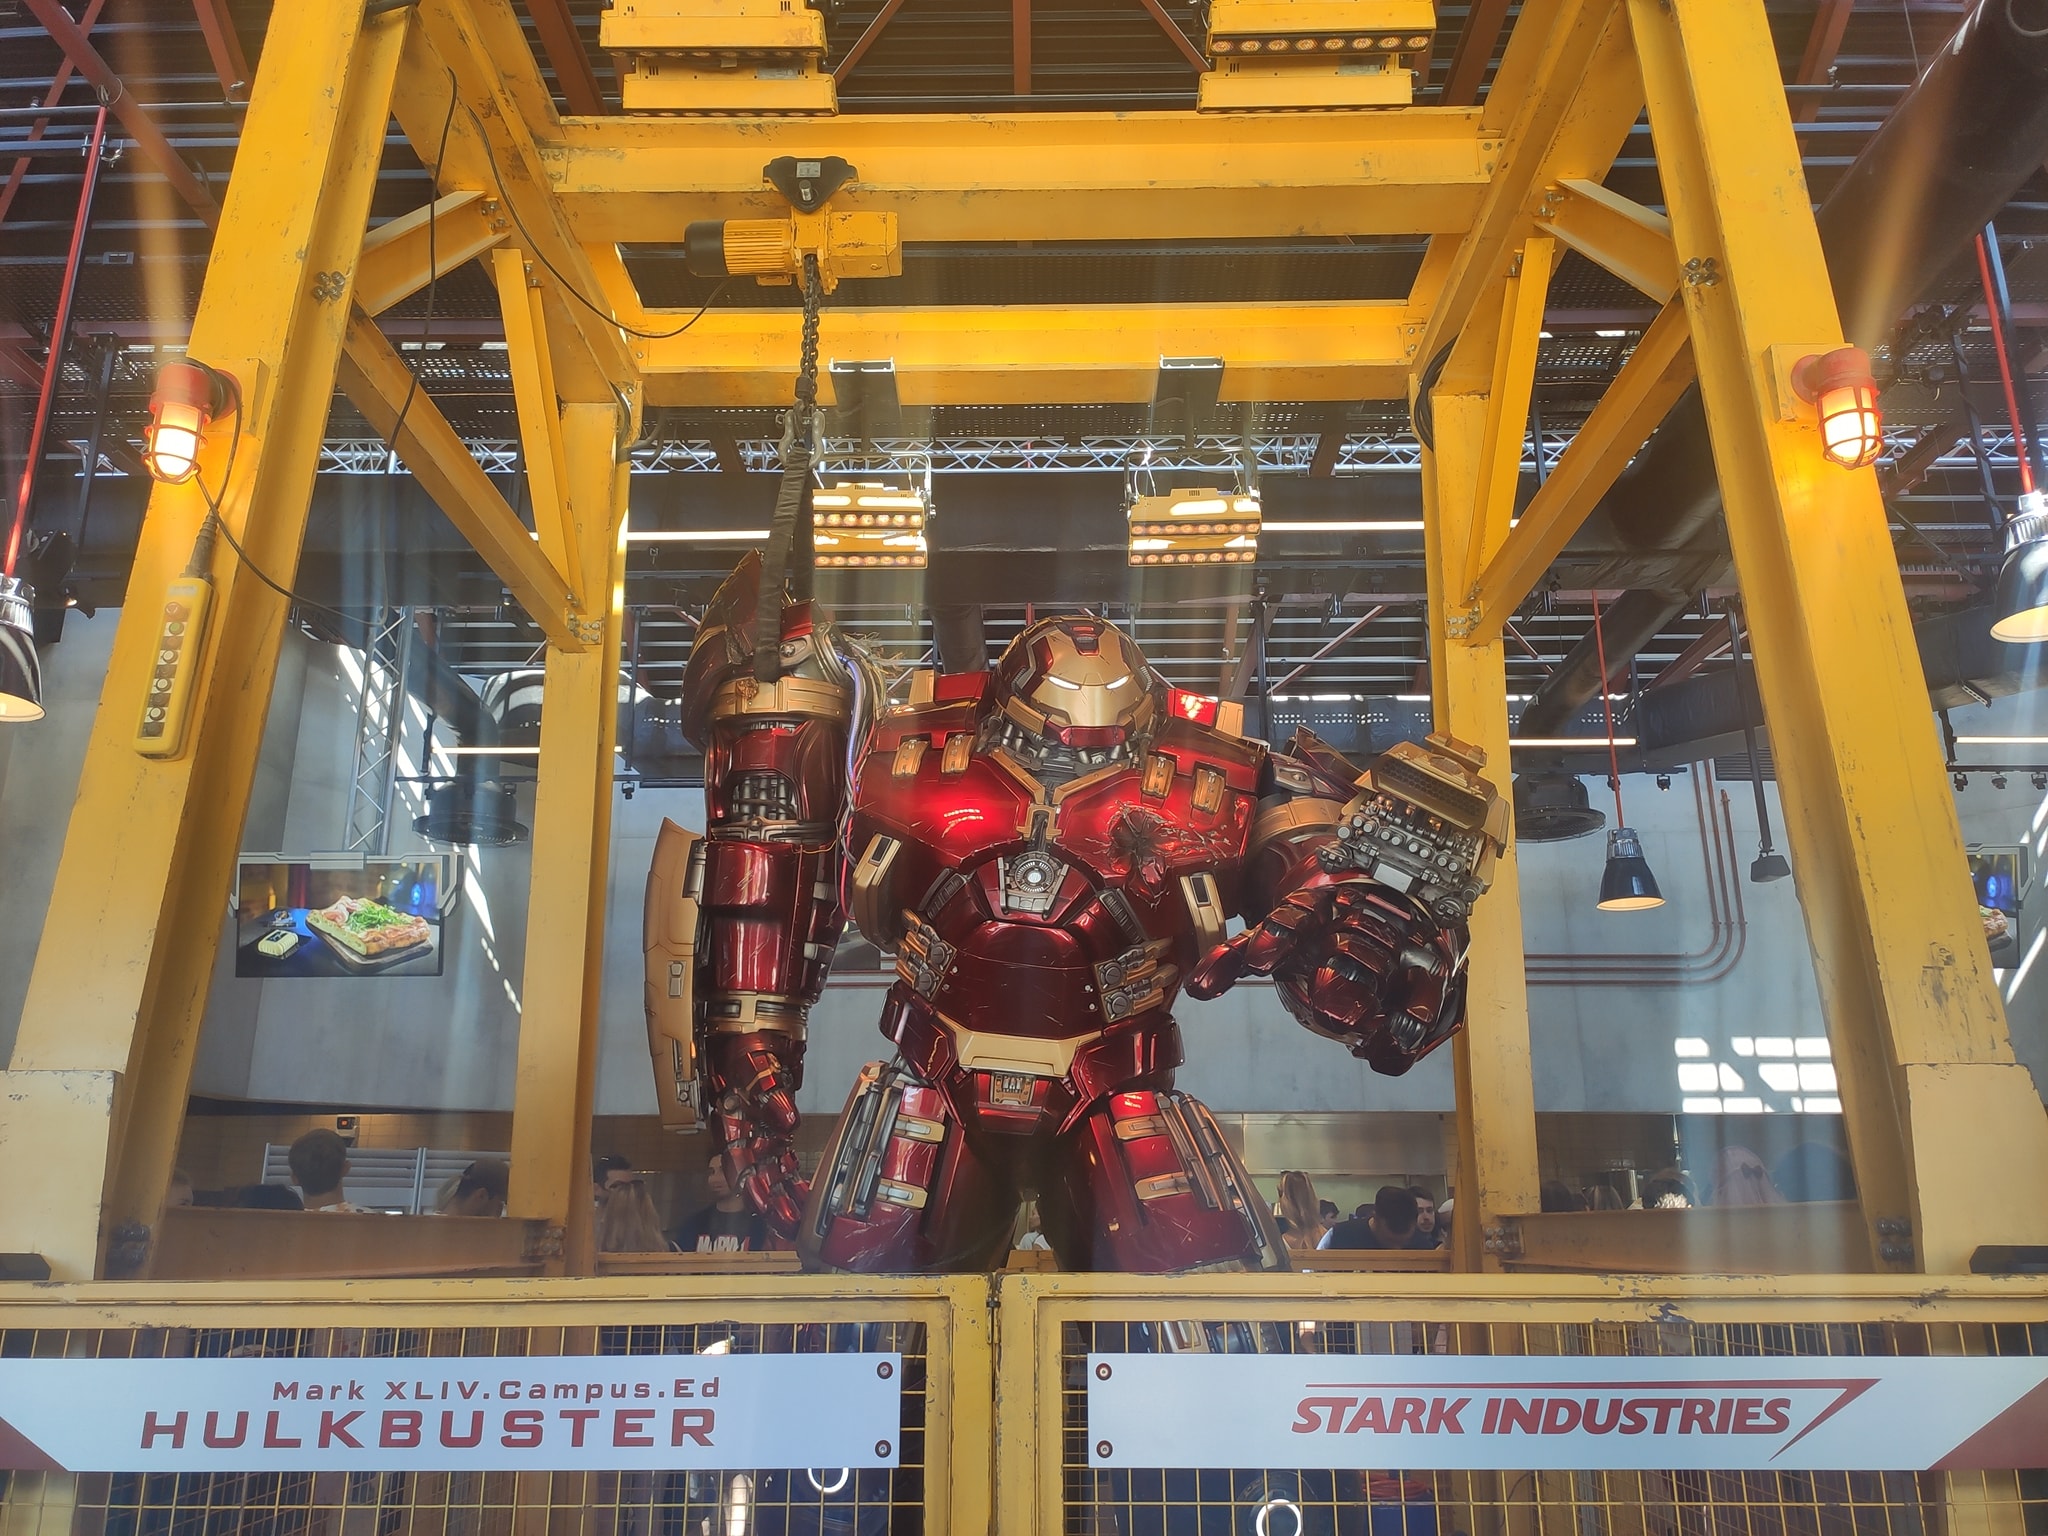 Hulkbuster Stark Industries - Avengers Campus - Disneyland Paris